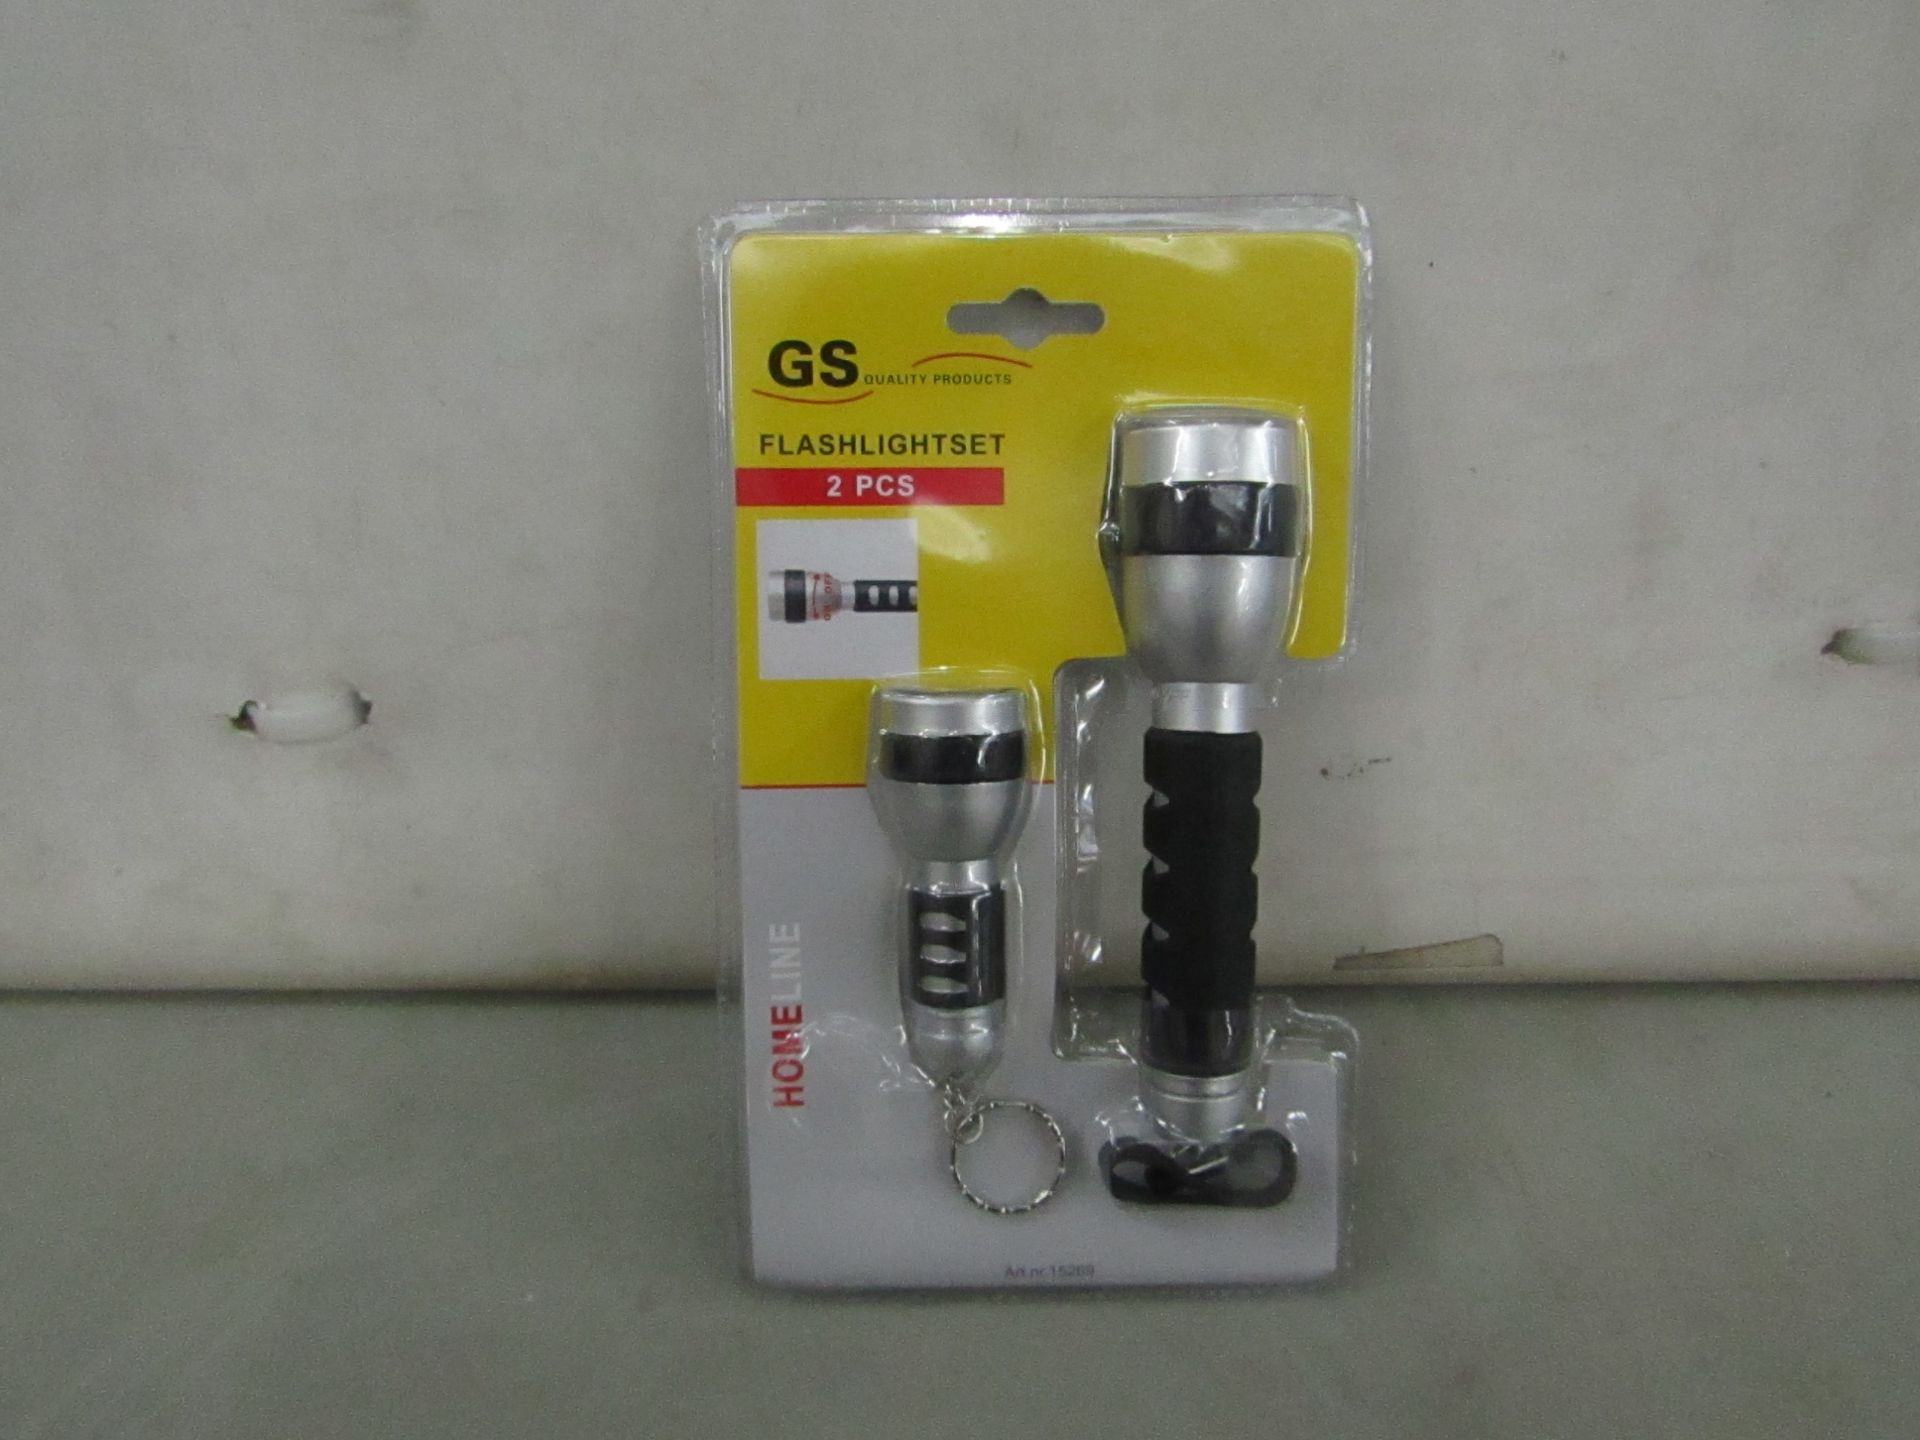 5x GS - Flashlight Set (2 Pieces) - Unused & Packaged.